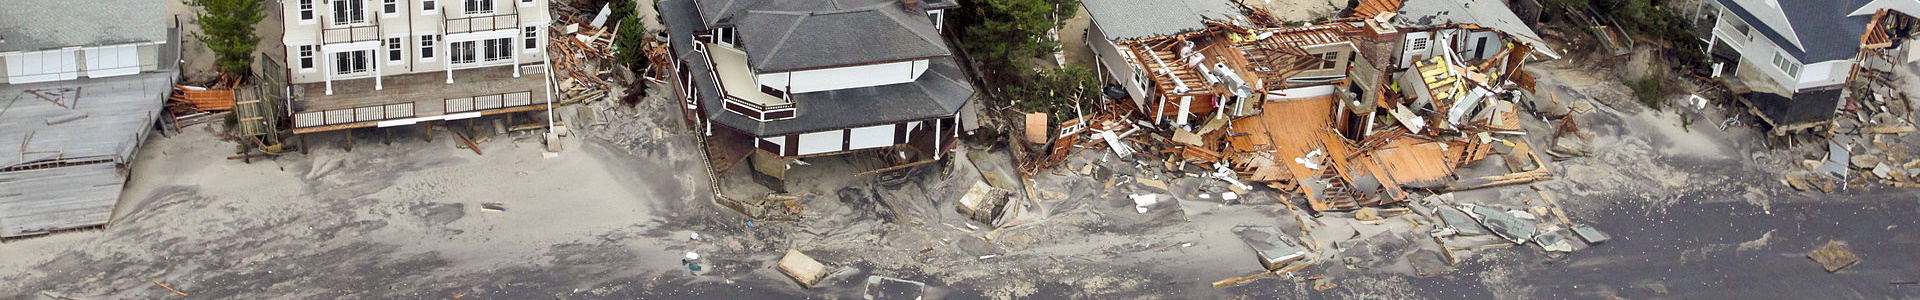 Hurricane Sandy aftermath on New Jersey Coast